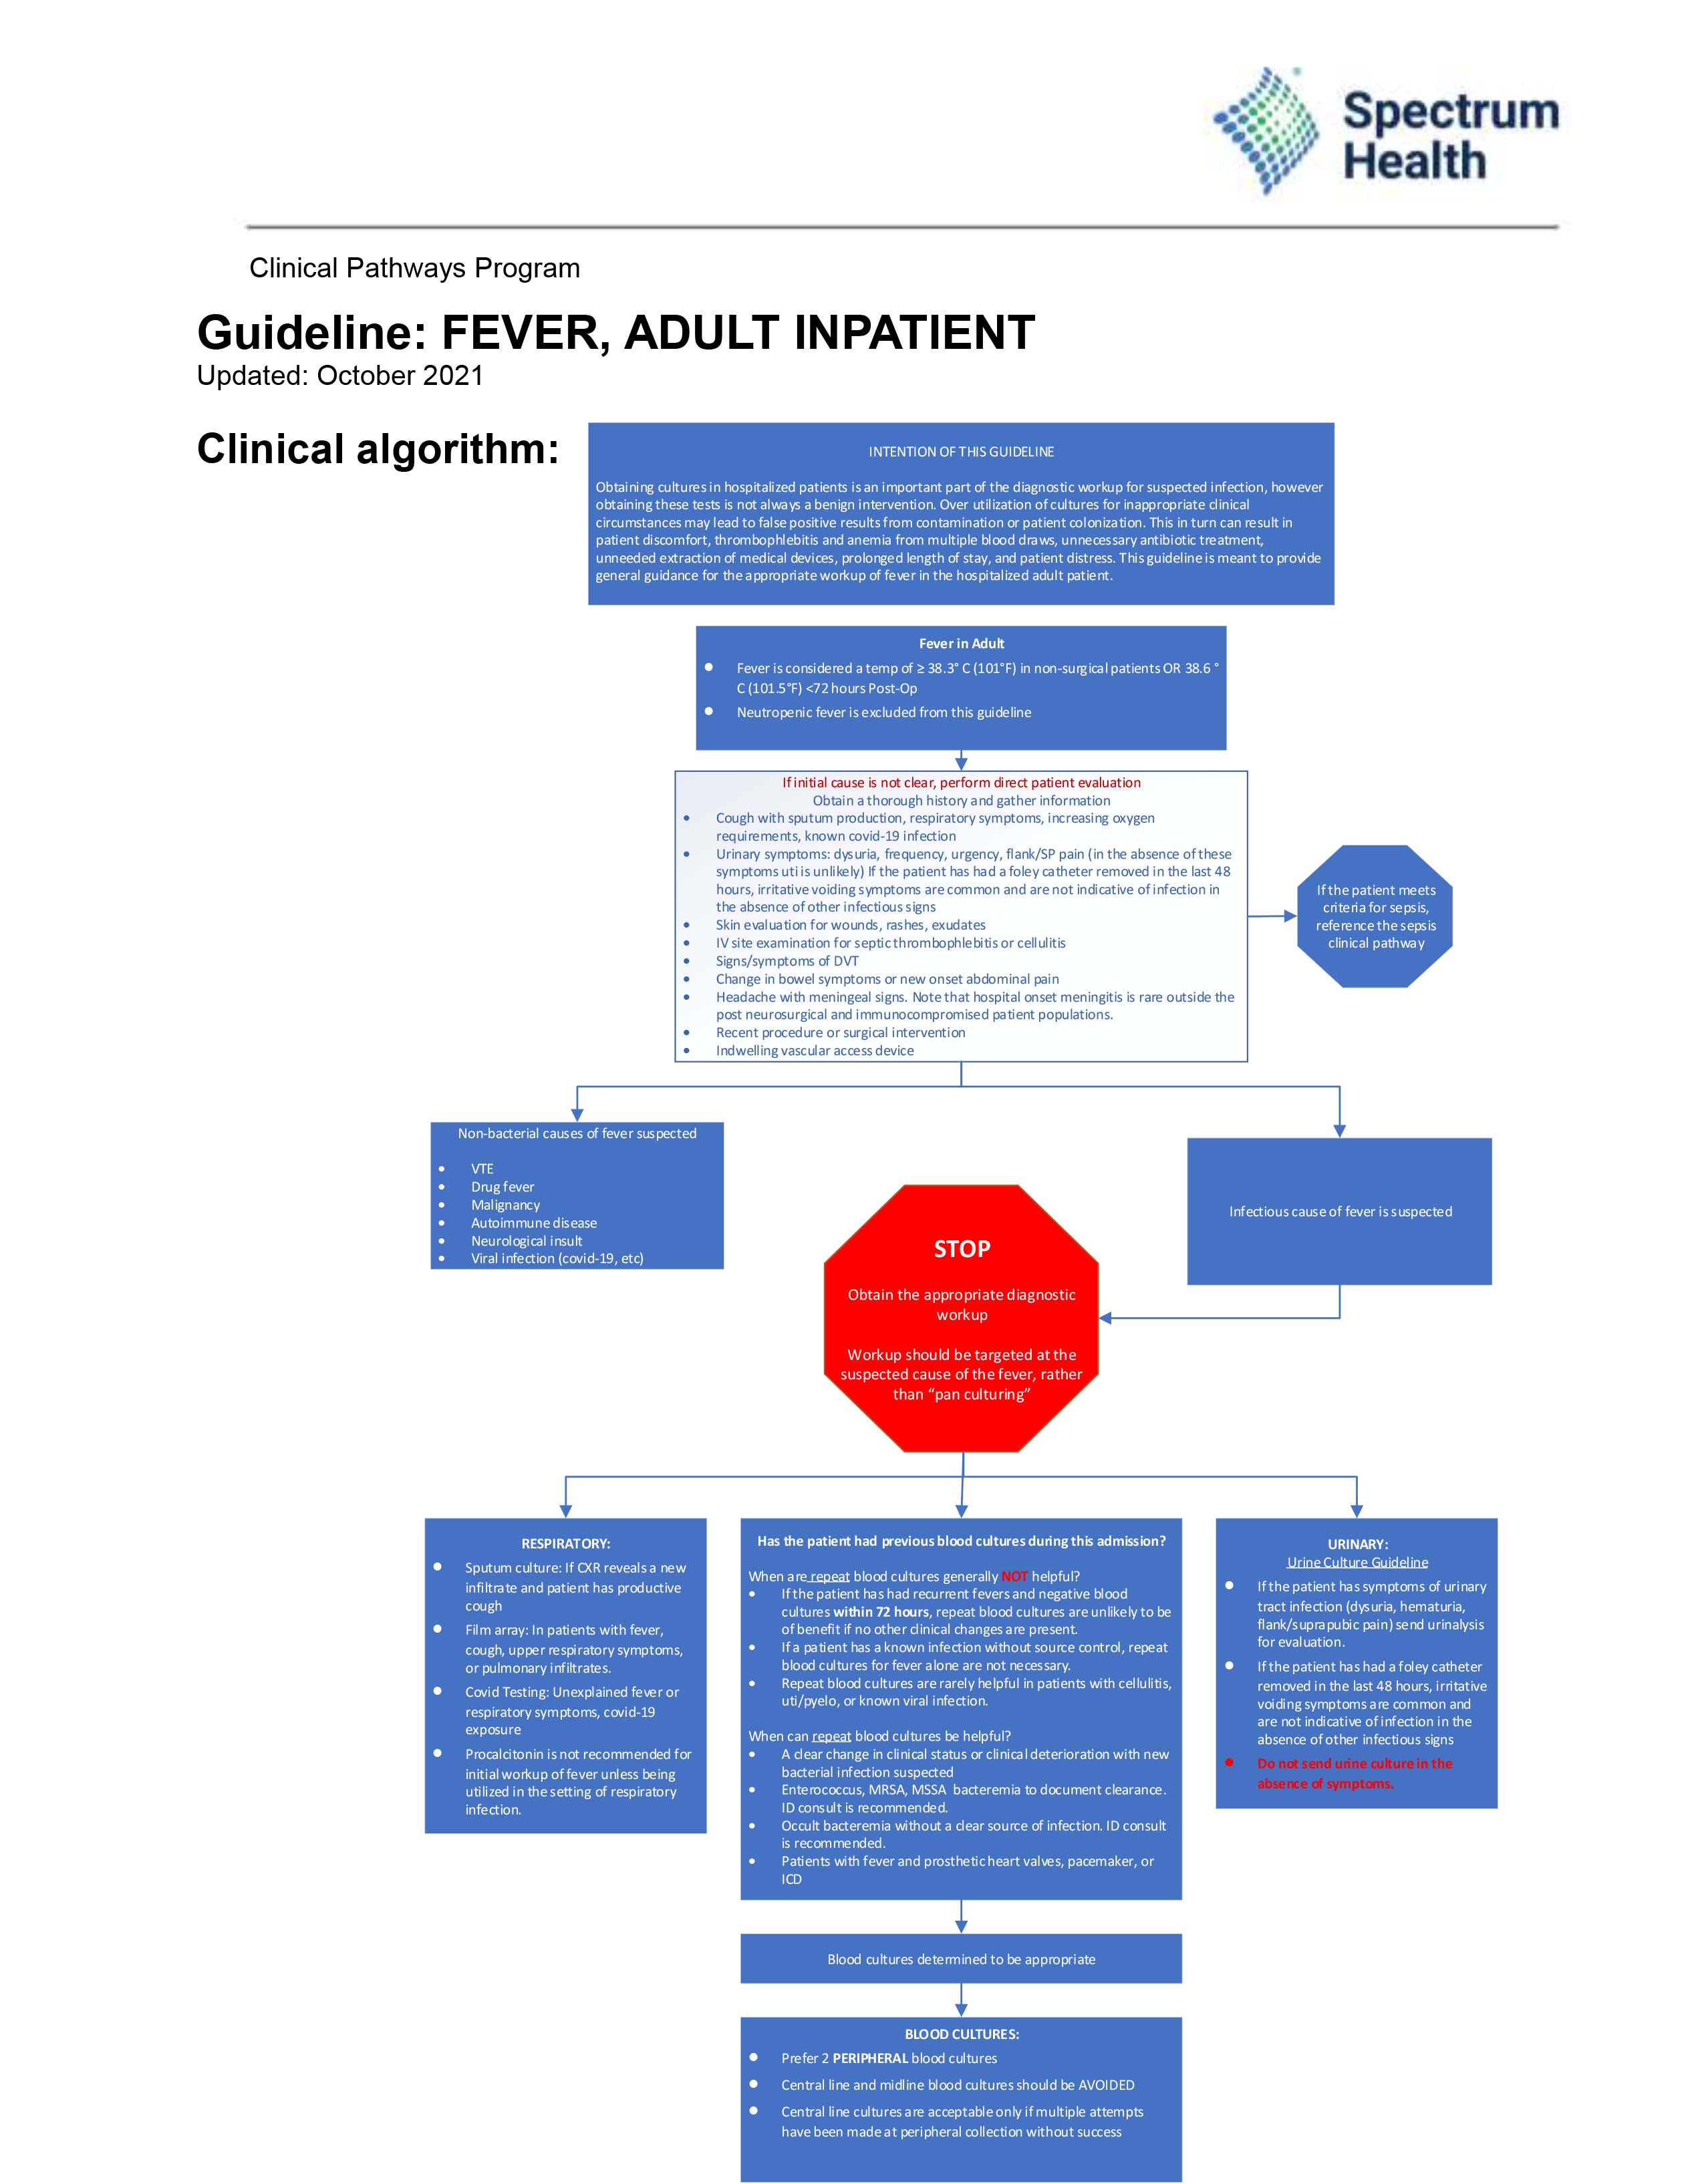 Adult fever inpatient clinical guideline flowchart